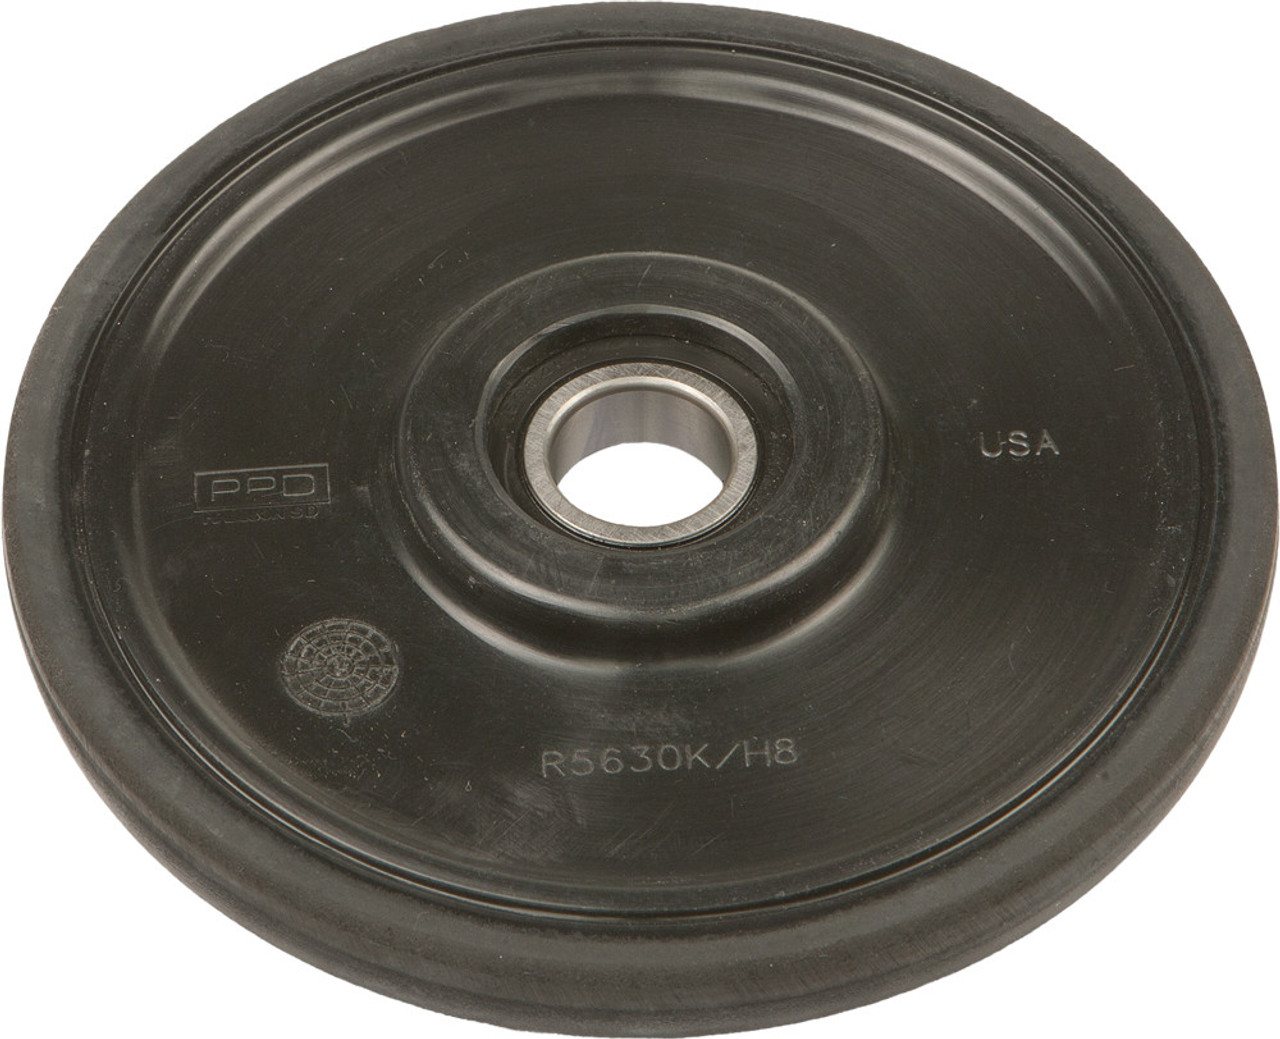 Idler Wheel compatible with Arctic Cat - Black color, 5.63"x 20mm Part# 541-5031 OEM# 1604-837, 3604-039